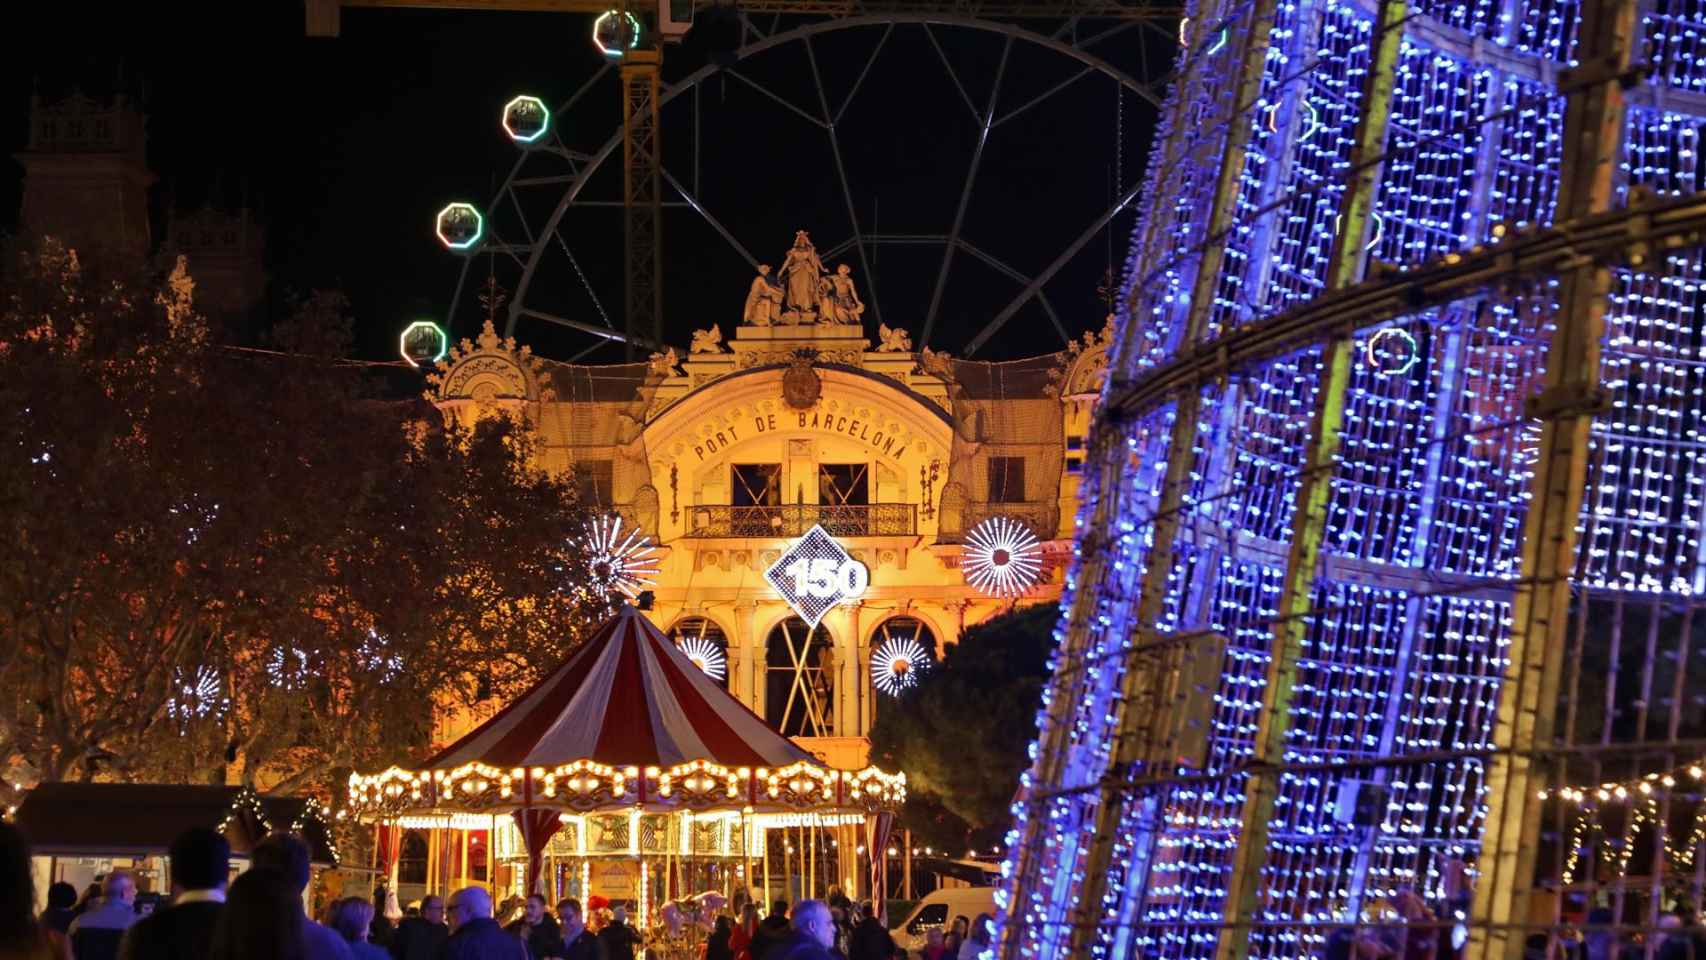 Plano general de la Feria de Navidad del Moll de la Fusta de Barcelona / EUROPA PRESS